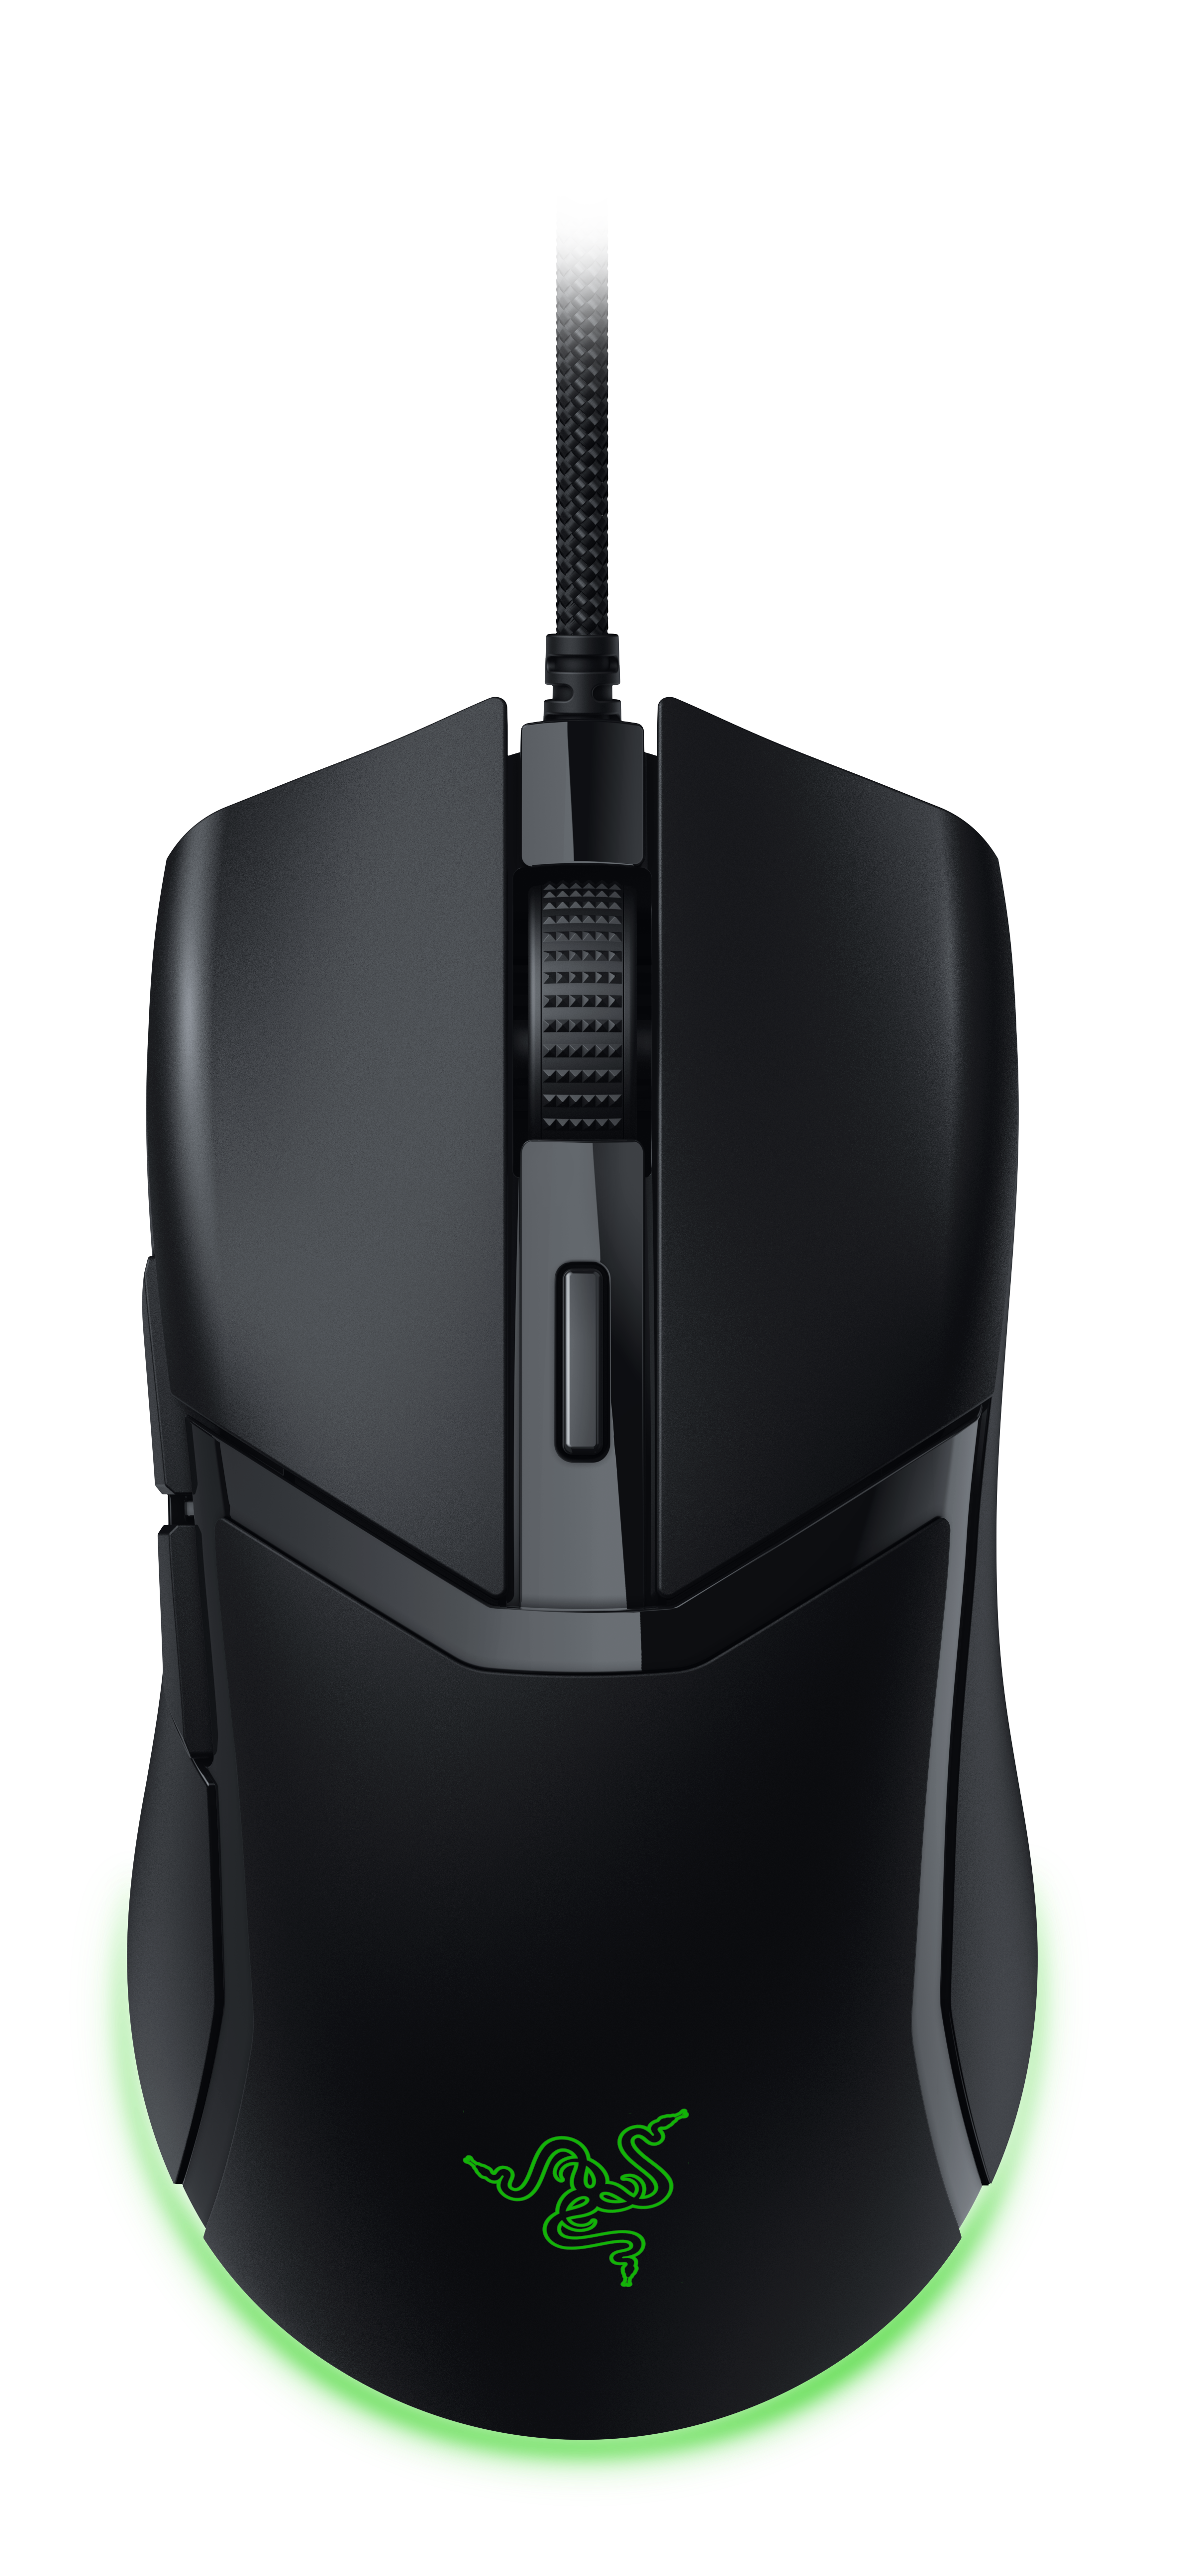 Razer Cobra Lightweight Black Wired Gaming Mouse with Razer Chroma RGB